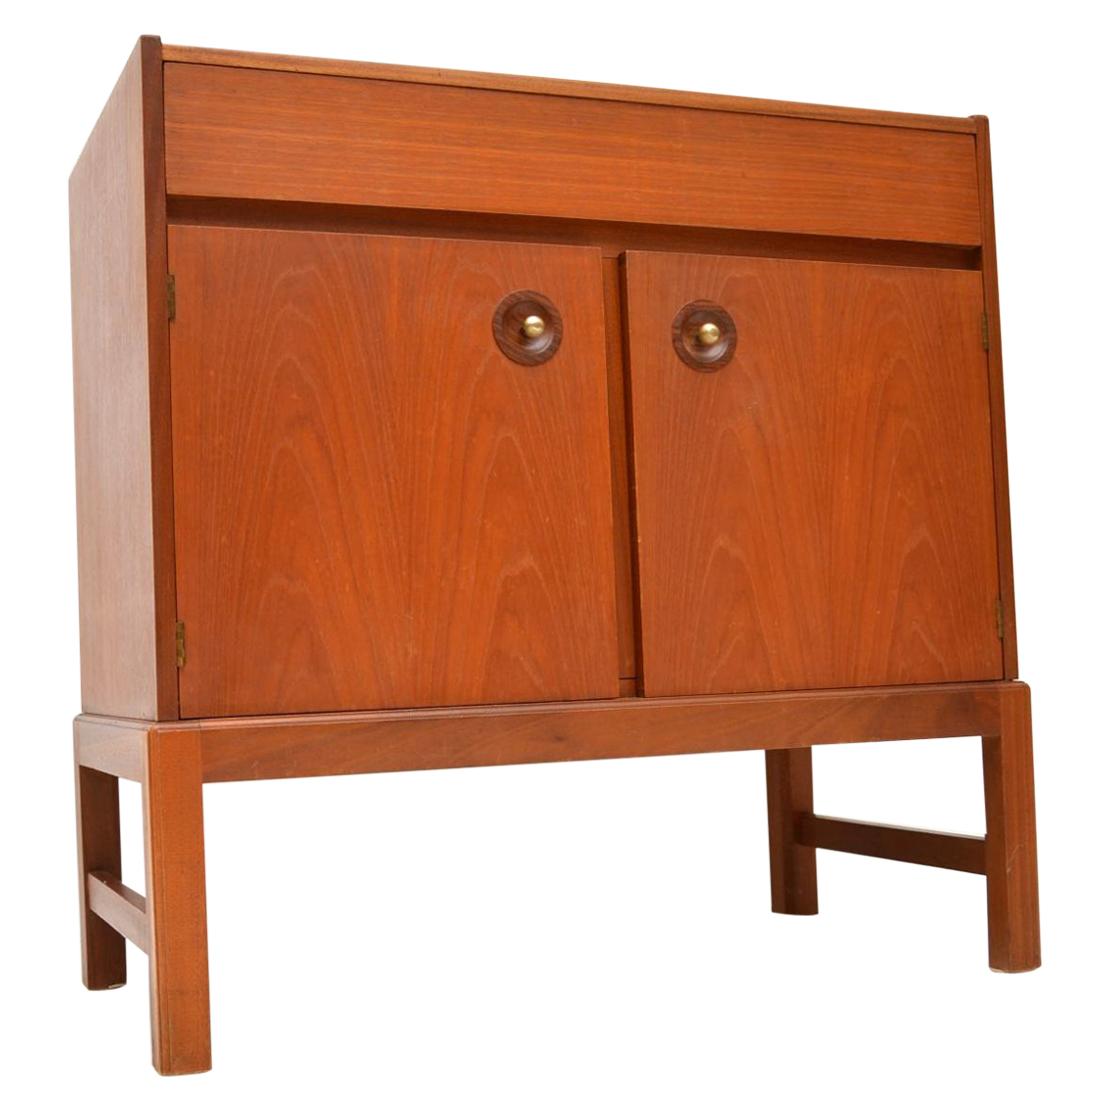 1960s Teak Vintage Cabinet by McIntosh